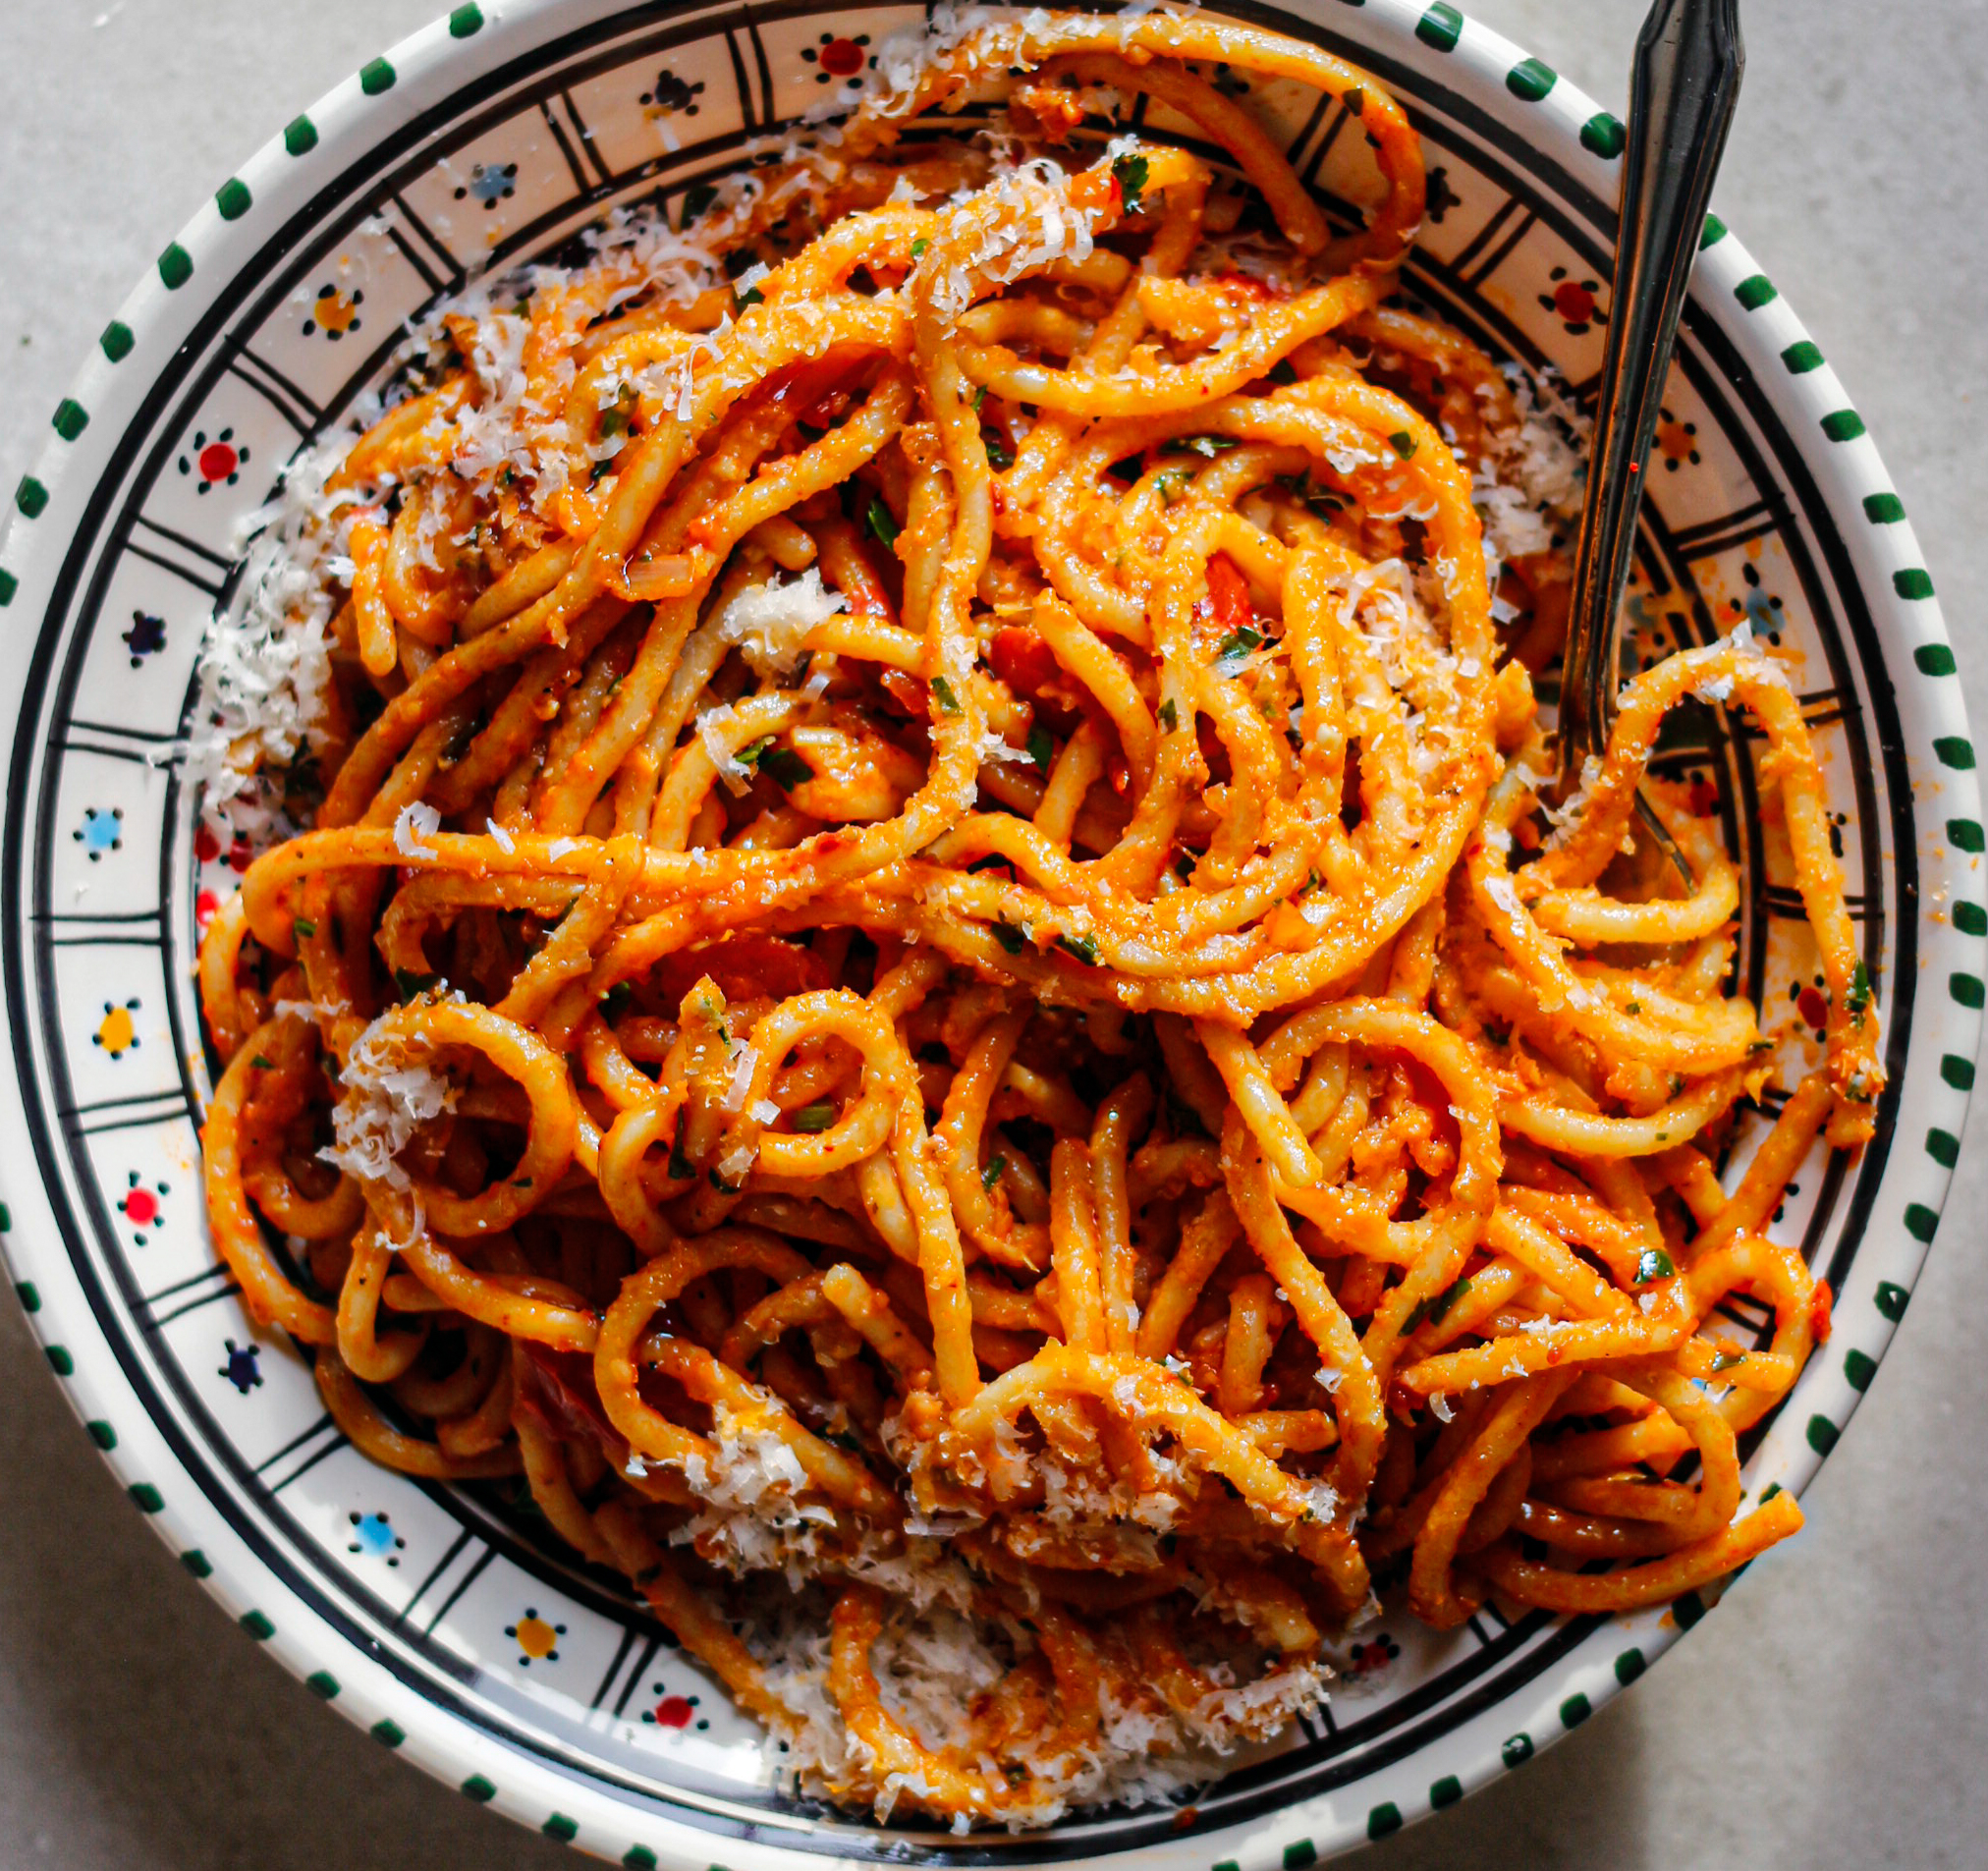 How to Make Spaghetti Arrabbiata